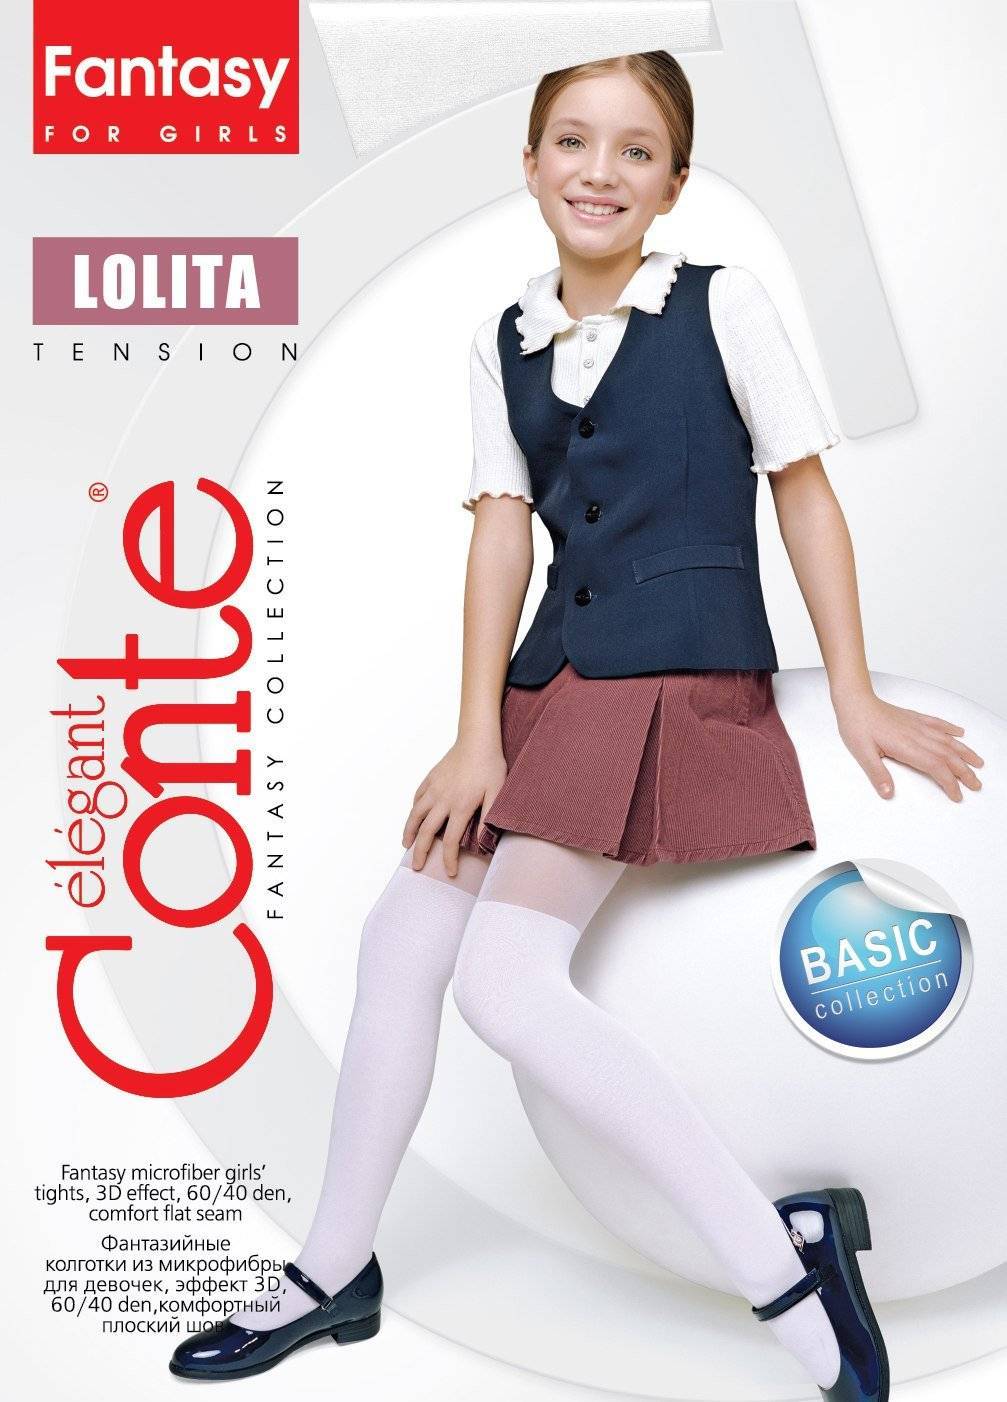 - 60 Conte Lolita Tights Den for girls